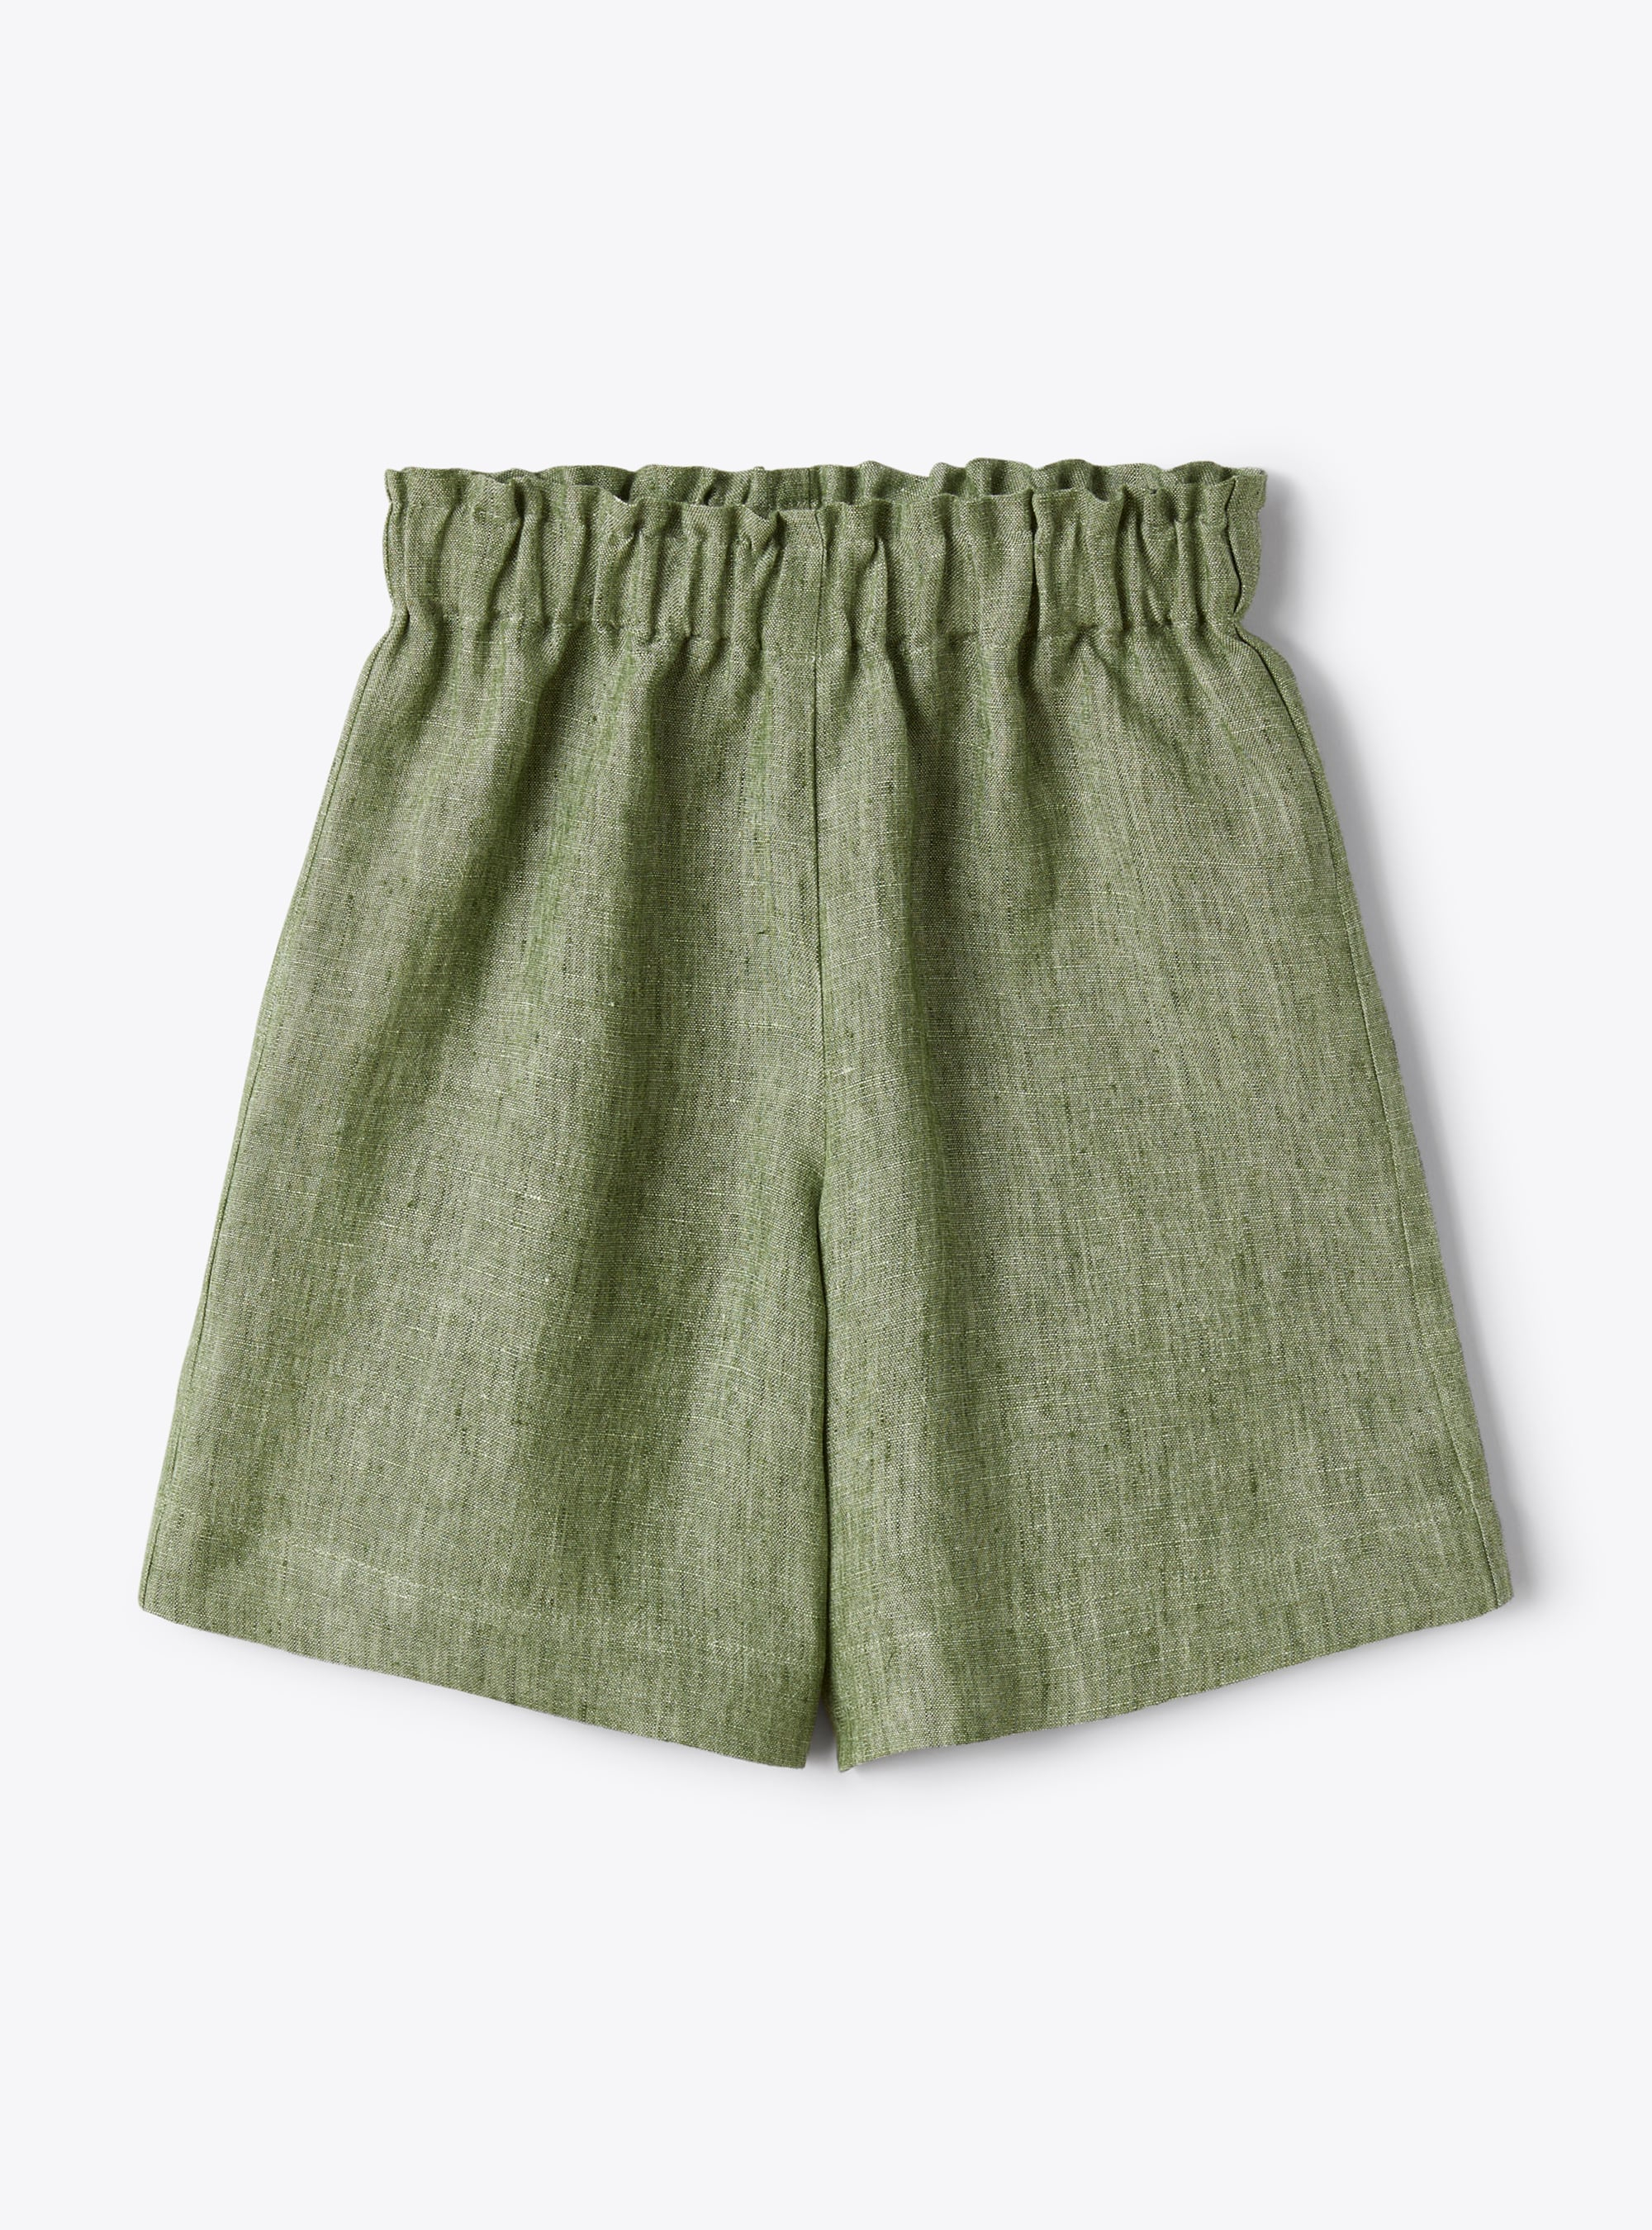 Bermuda shorts in sage-green mélange linen - Trousers - Il Gufo